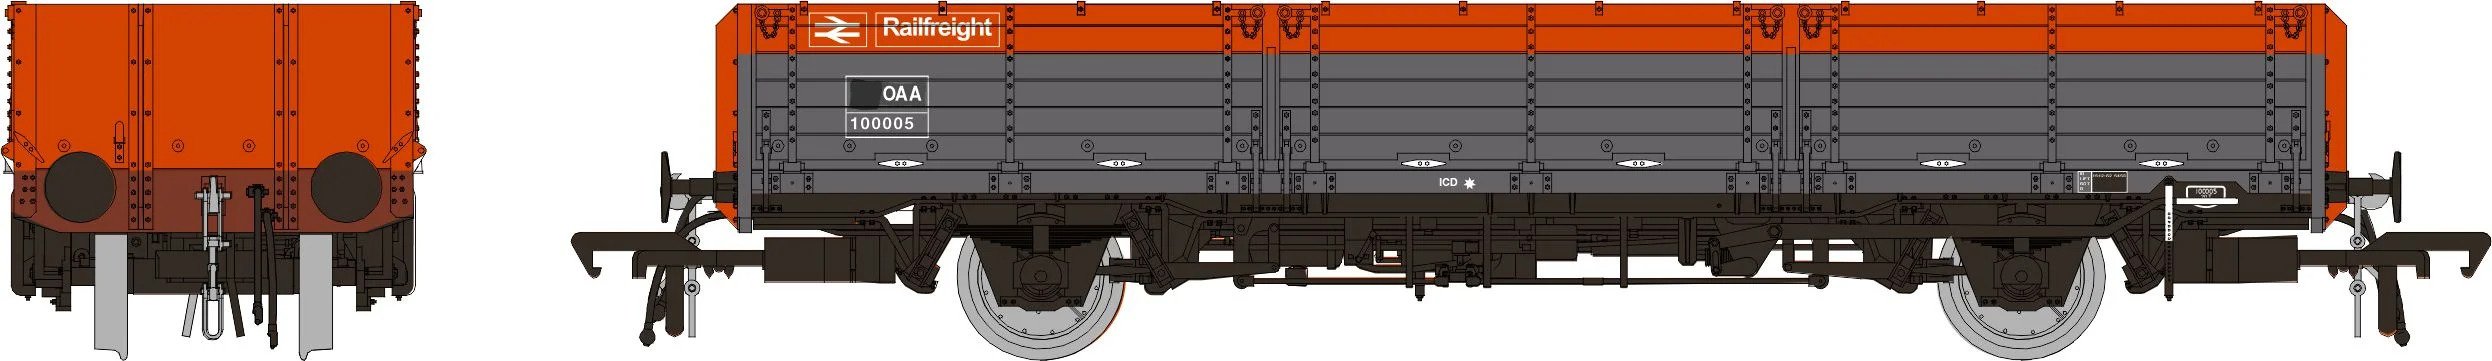 Rapido Trains 915013 OAA No. 100095, Railfreight red/grey